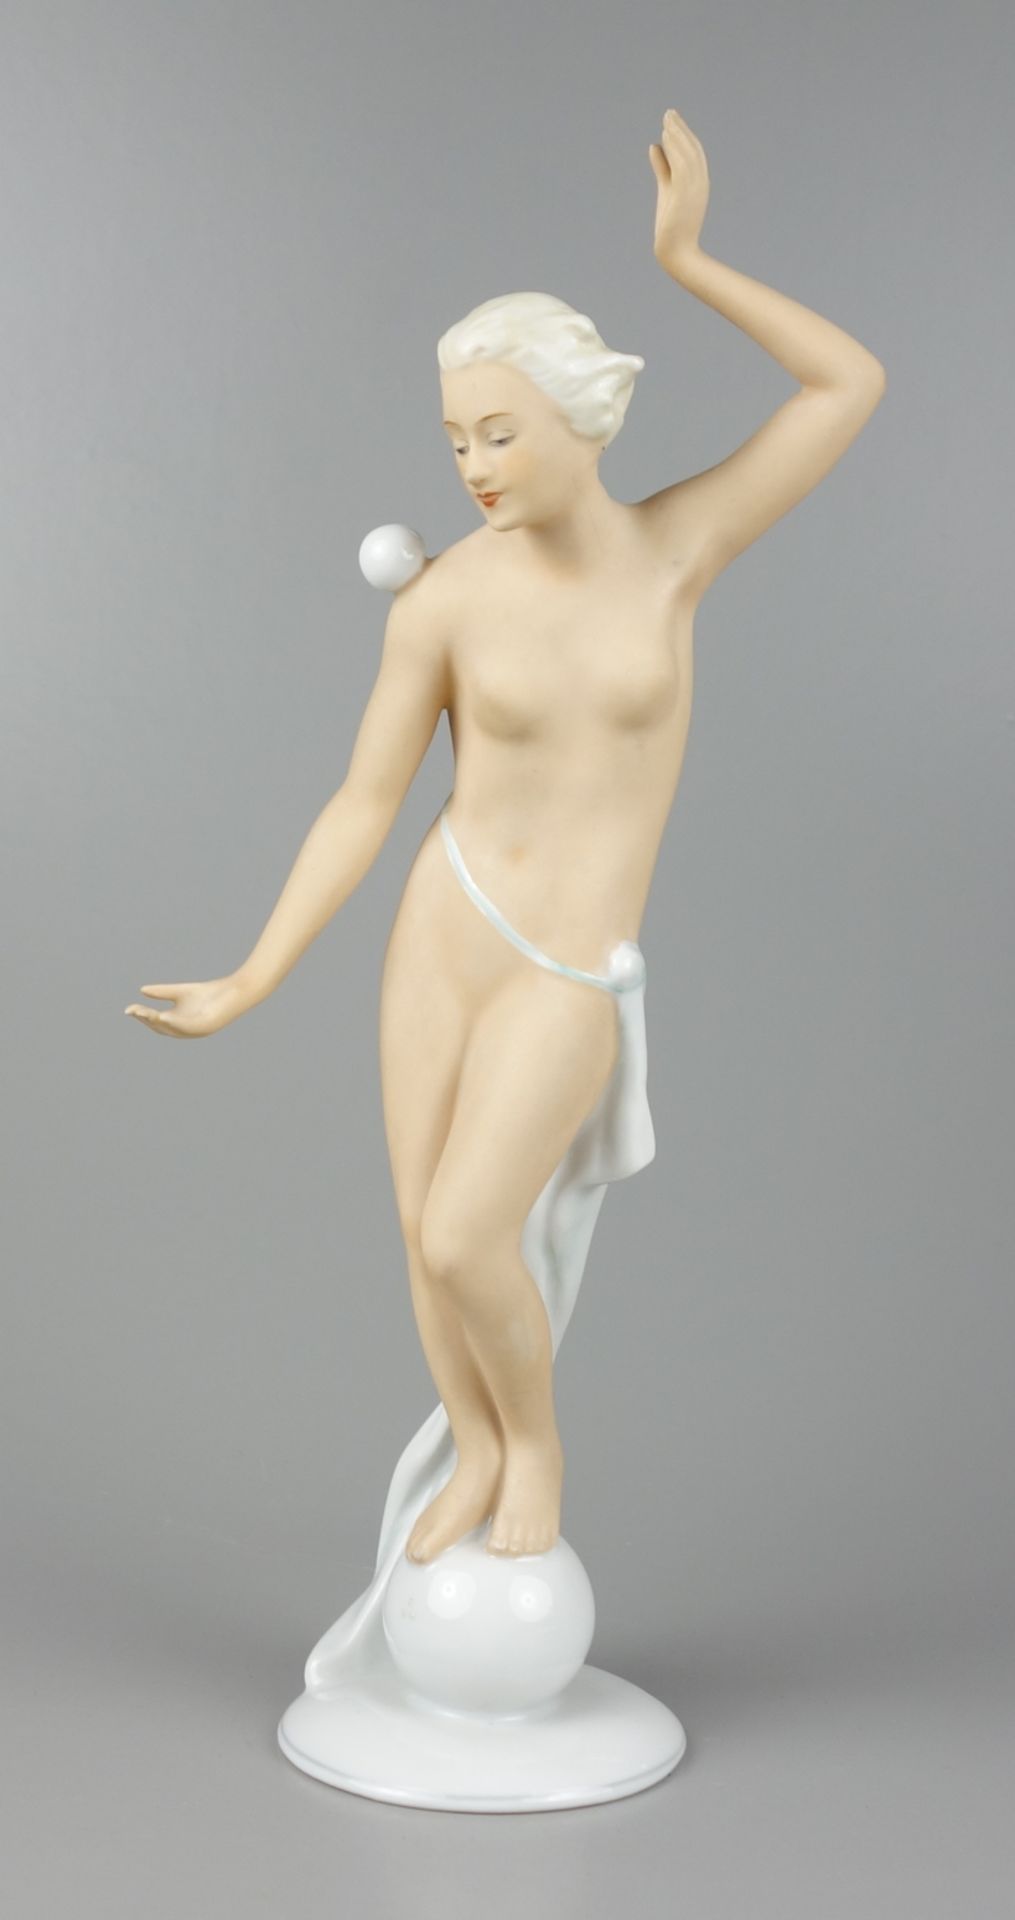 Nude woman with ball, Schaubachkunst, c. 1930 - Image 2 of 4